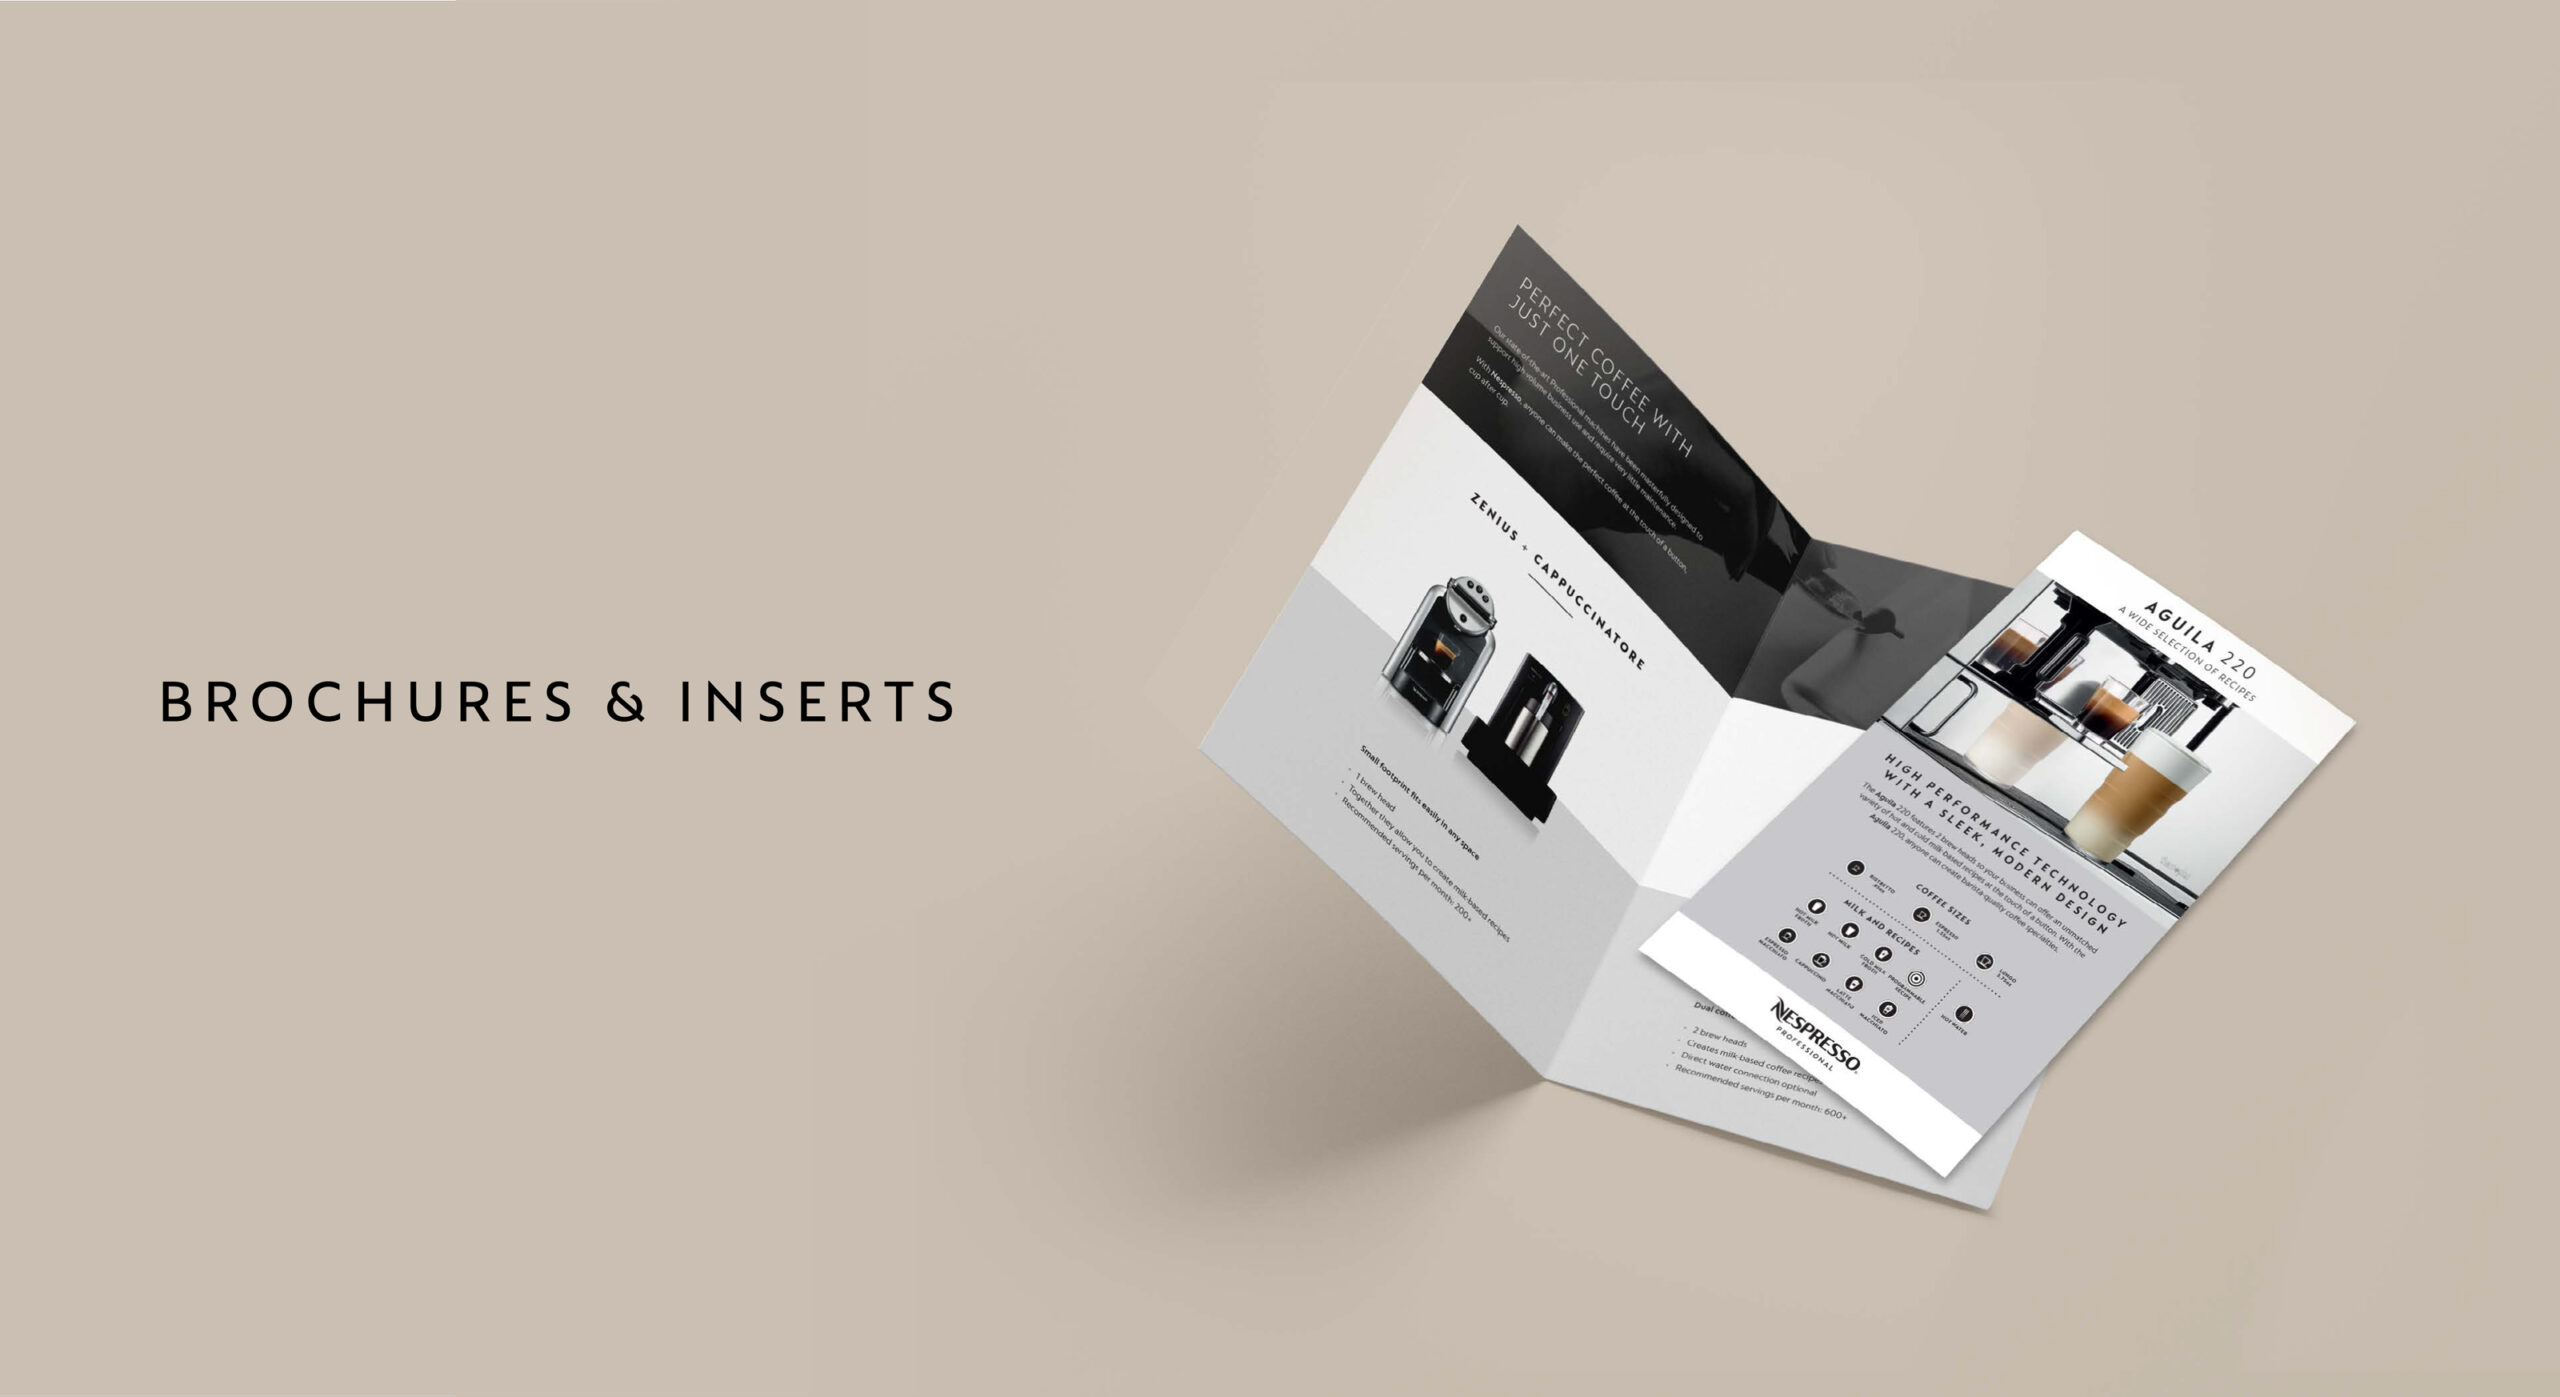 Brochures & inserts for Nespresso